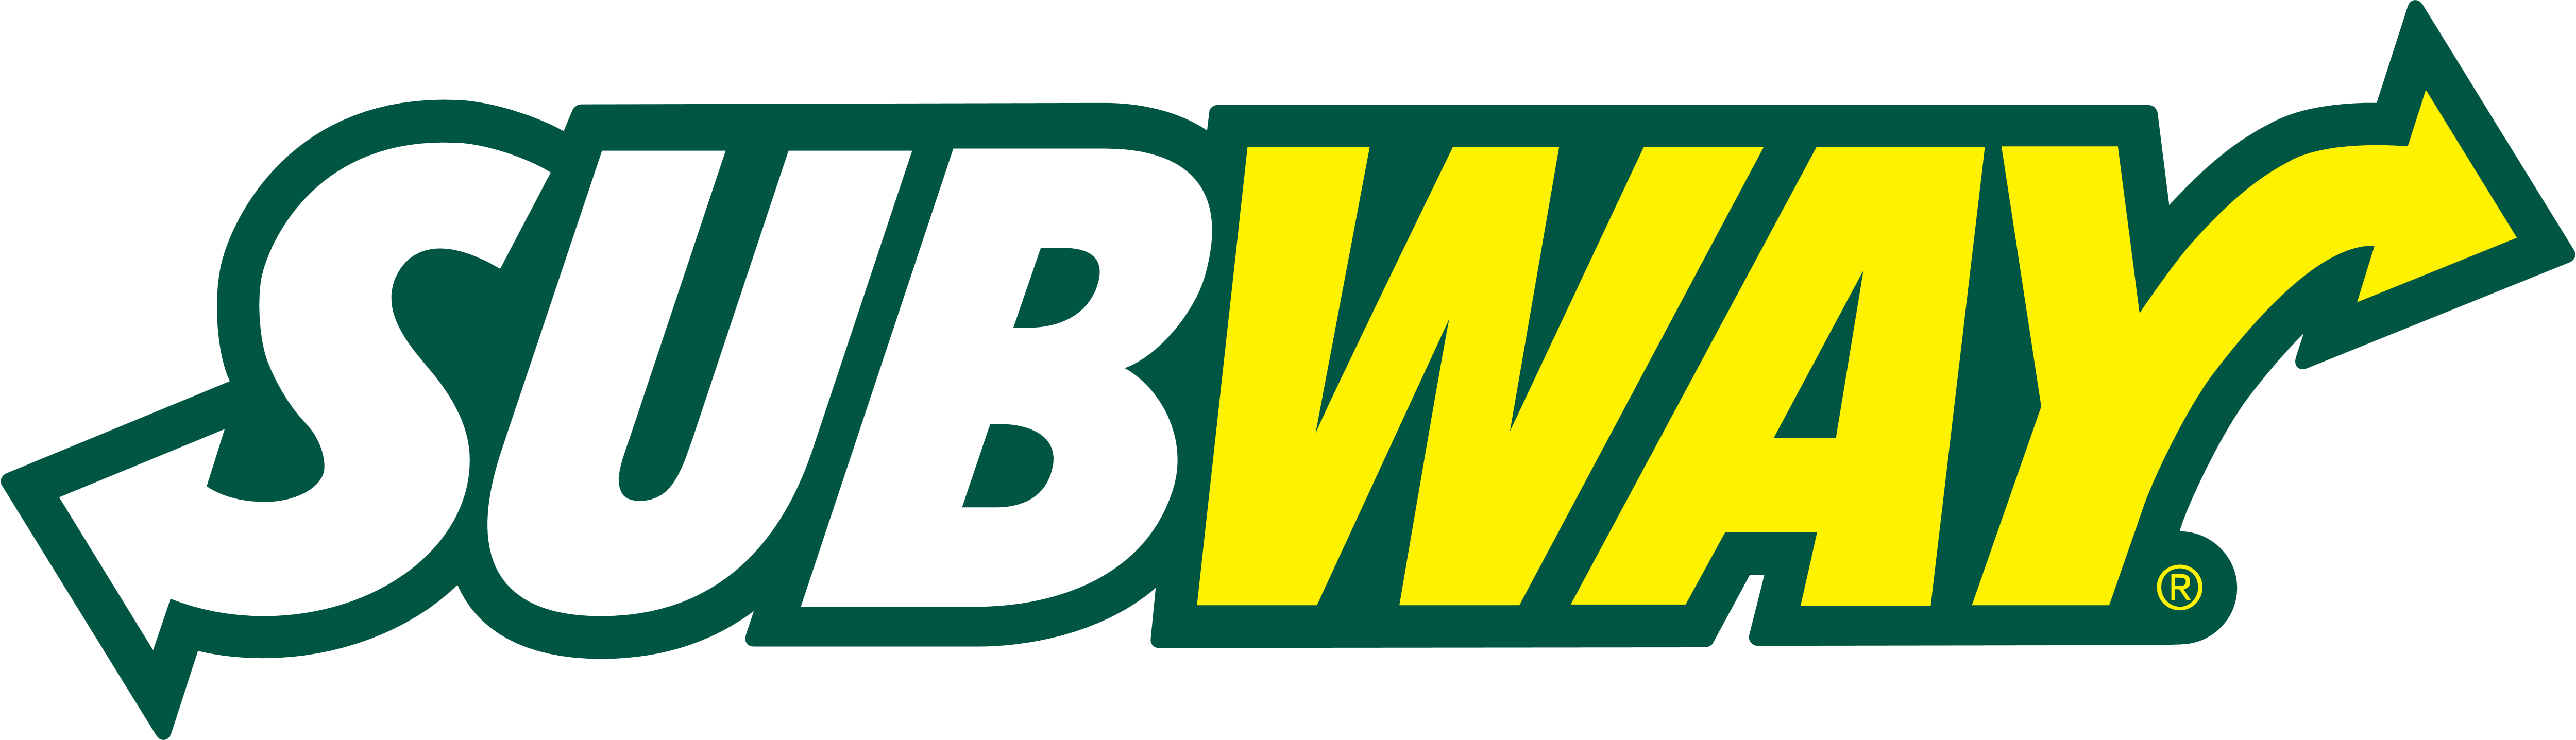 inspired business media, subway logo #4292